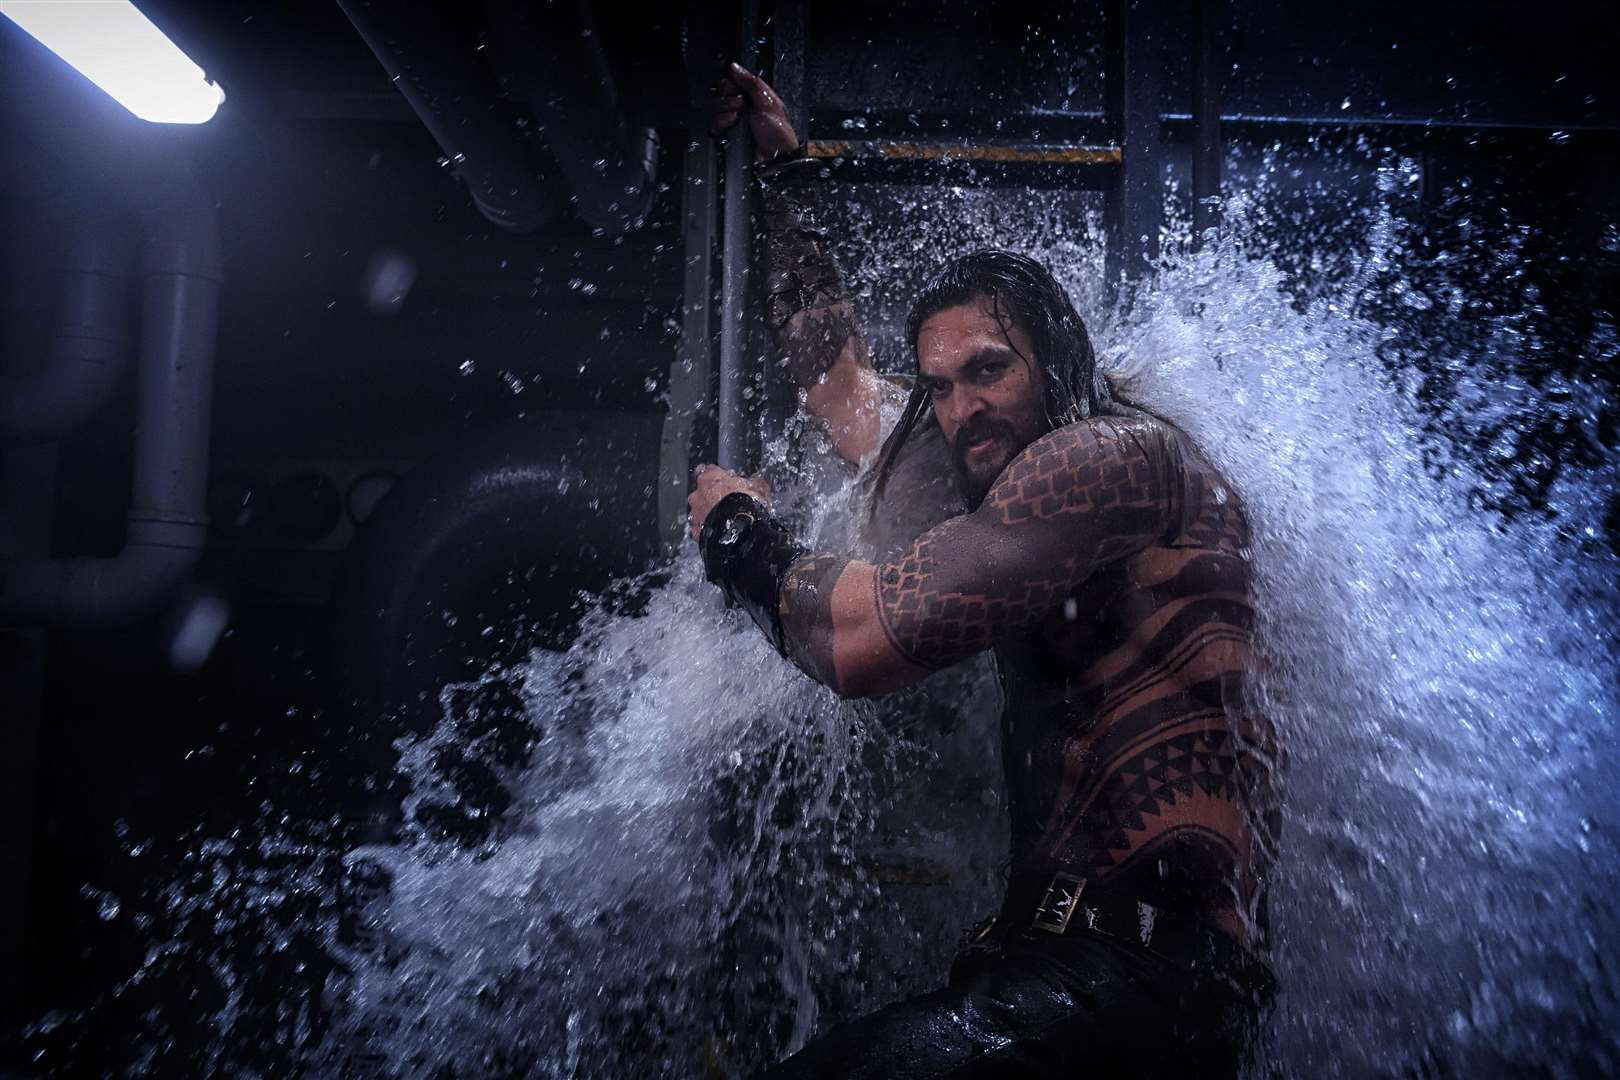 Jason Momoa as Arthur Curry/Aquaman. Picture credit: PA Photo/Warner Bros.